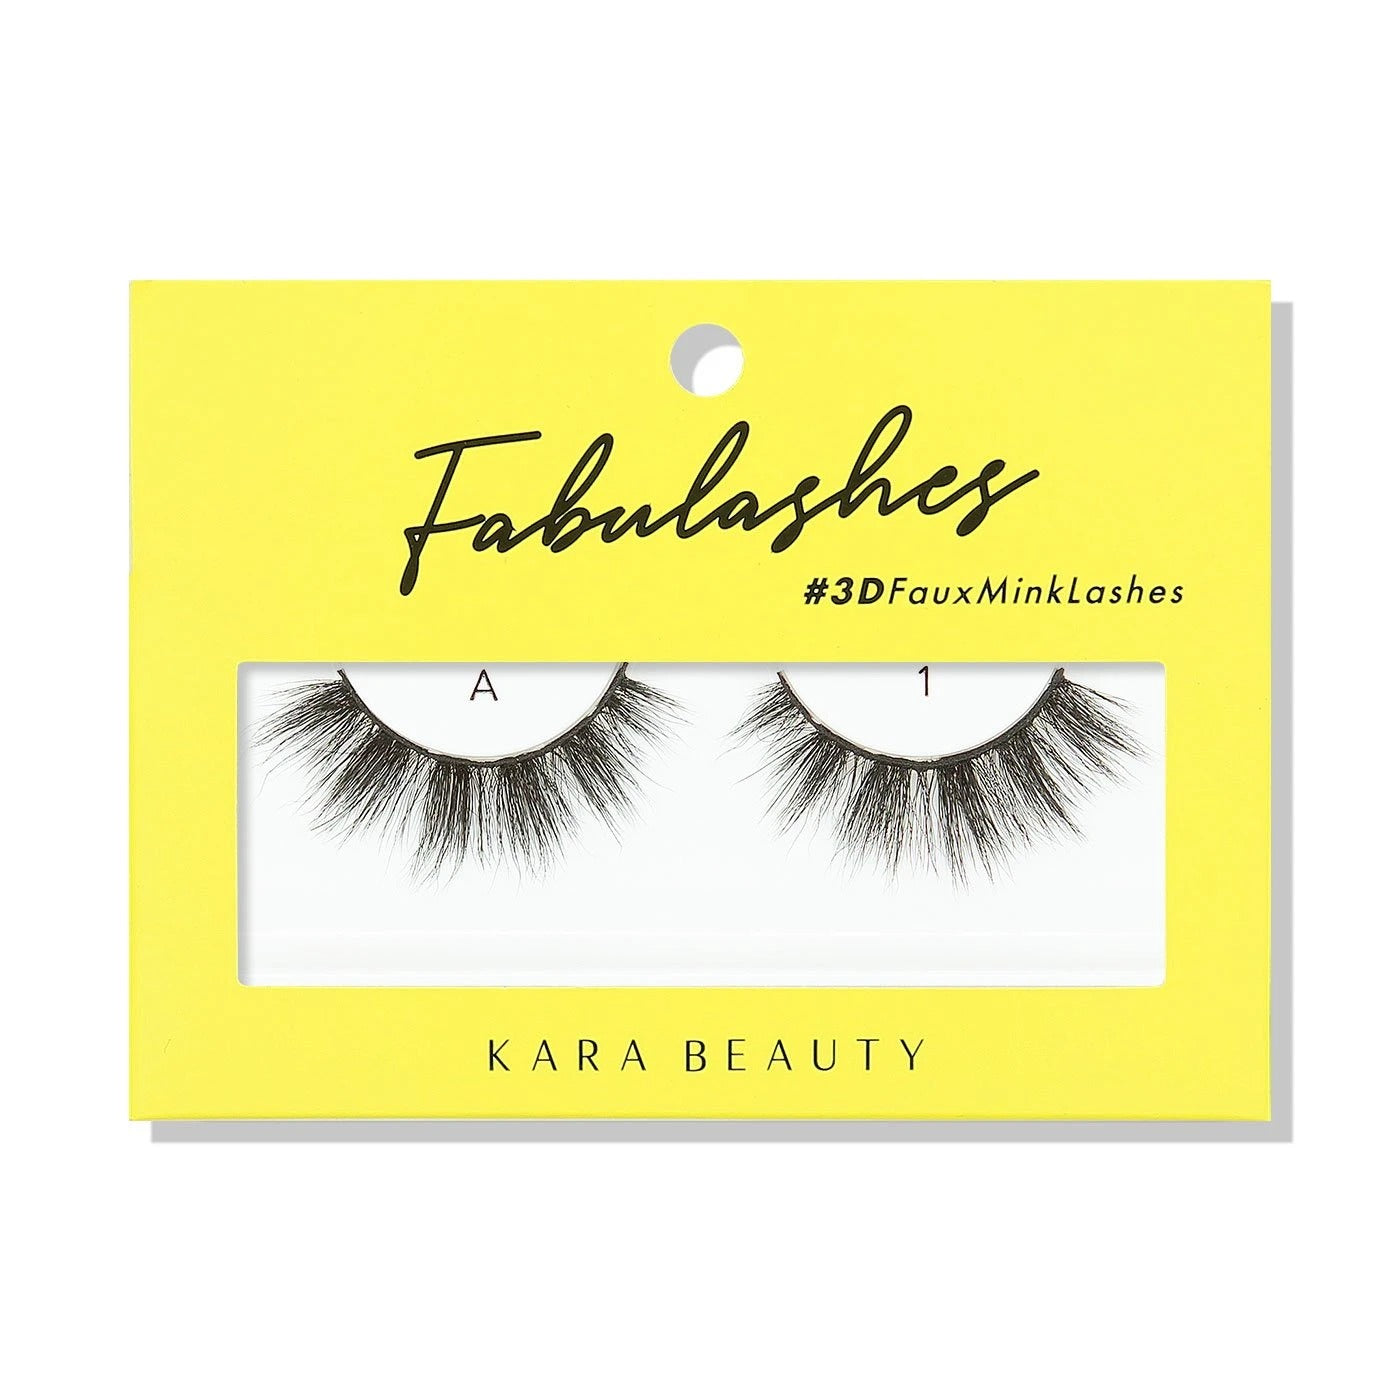 Kara Beauty Fabulashes 3D Faux Mink Lashes